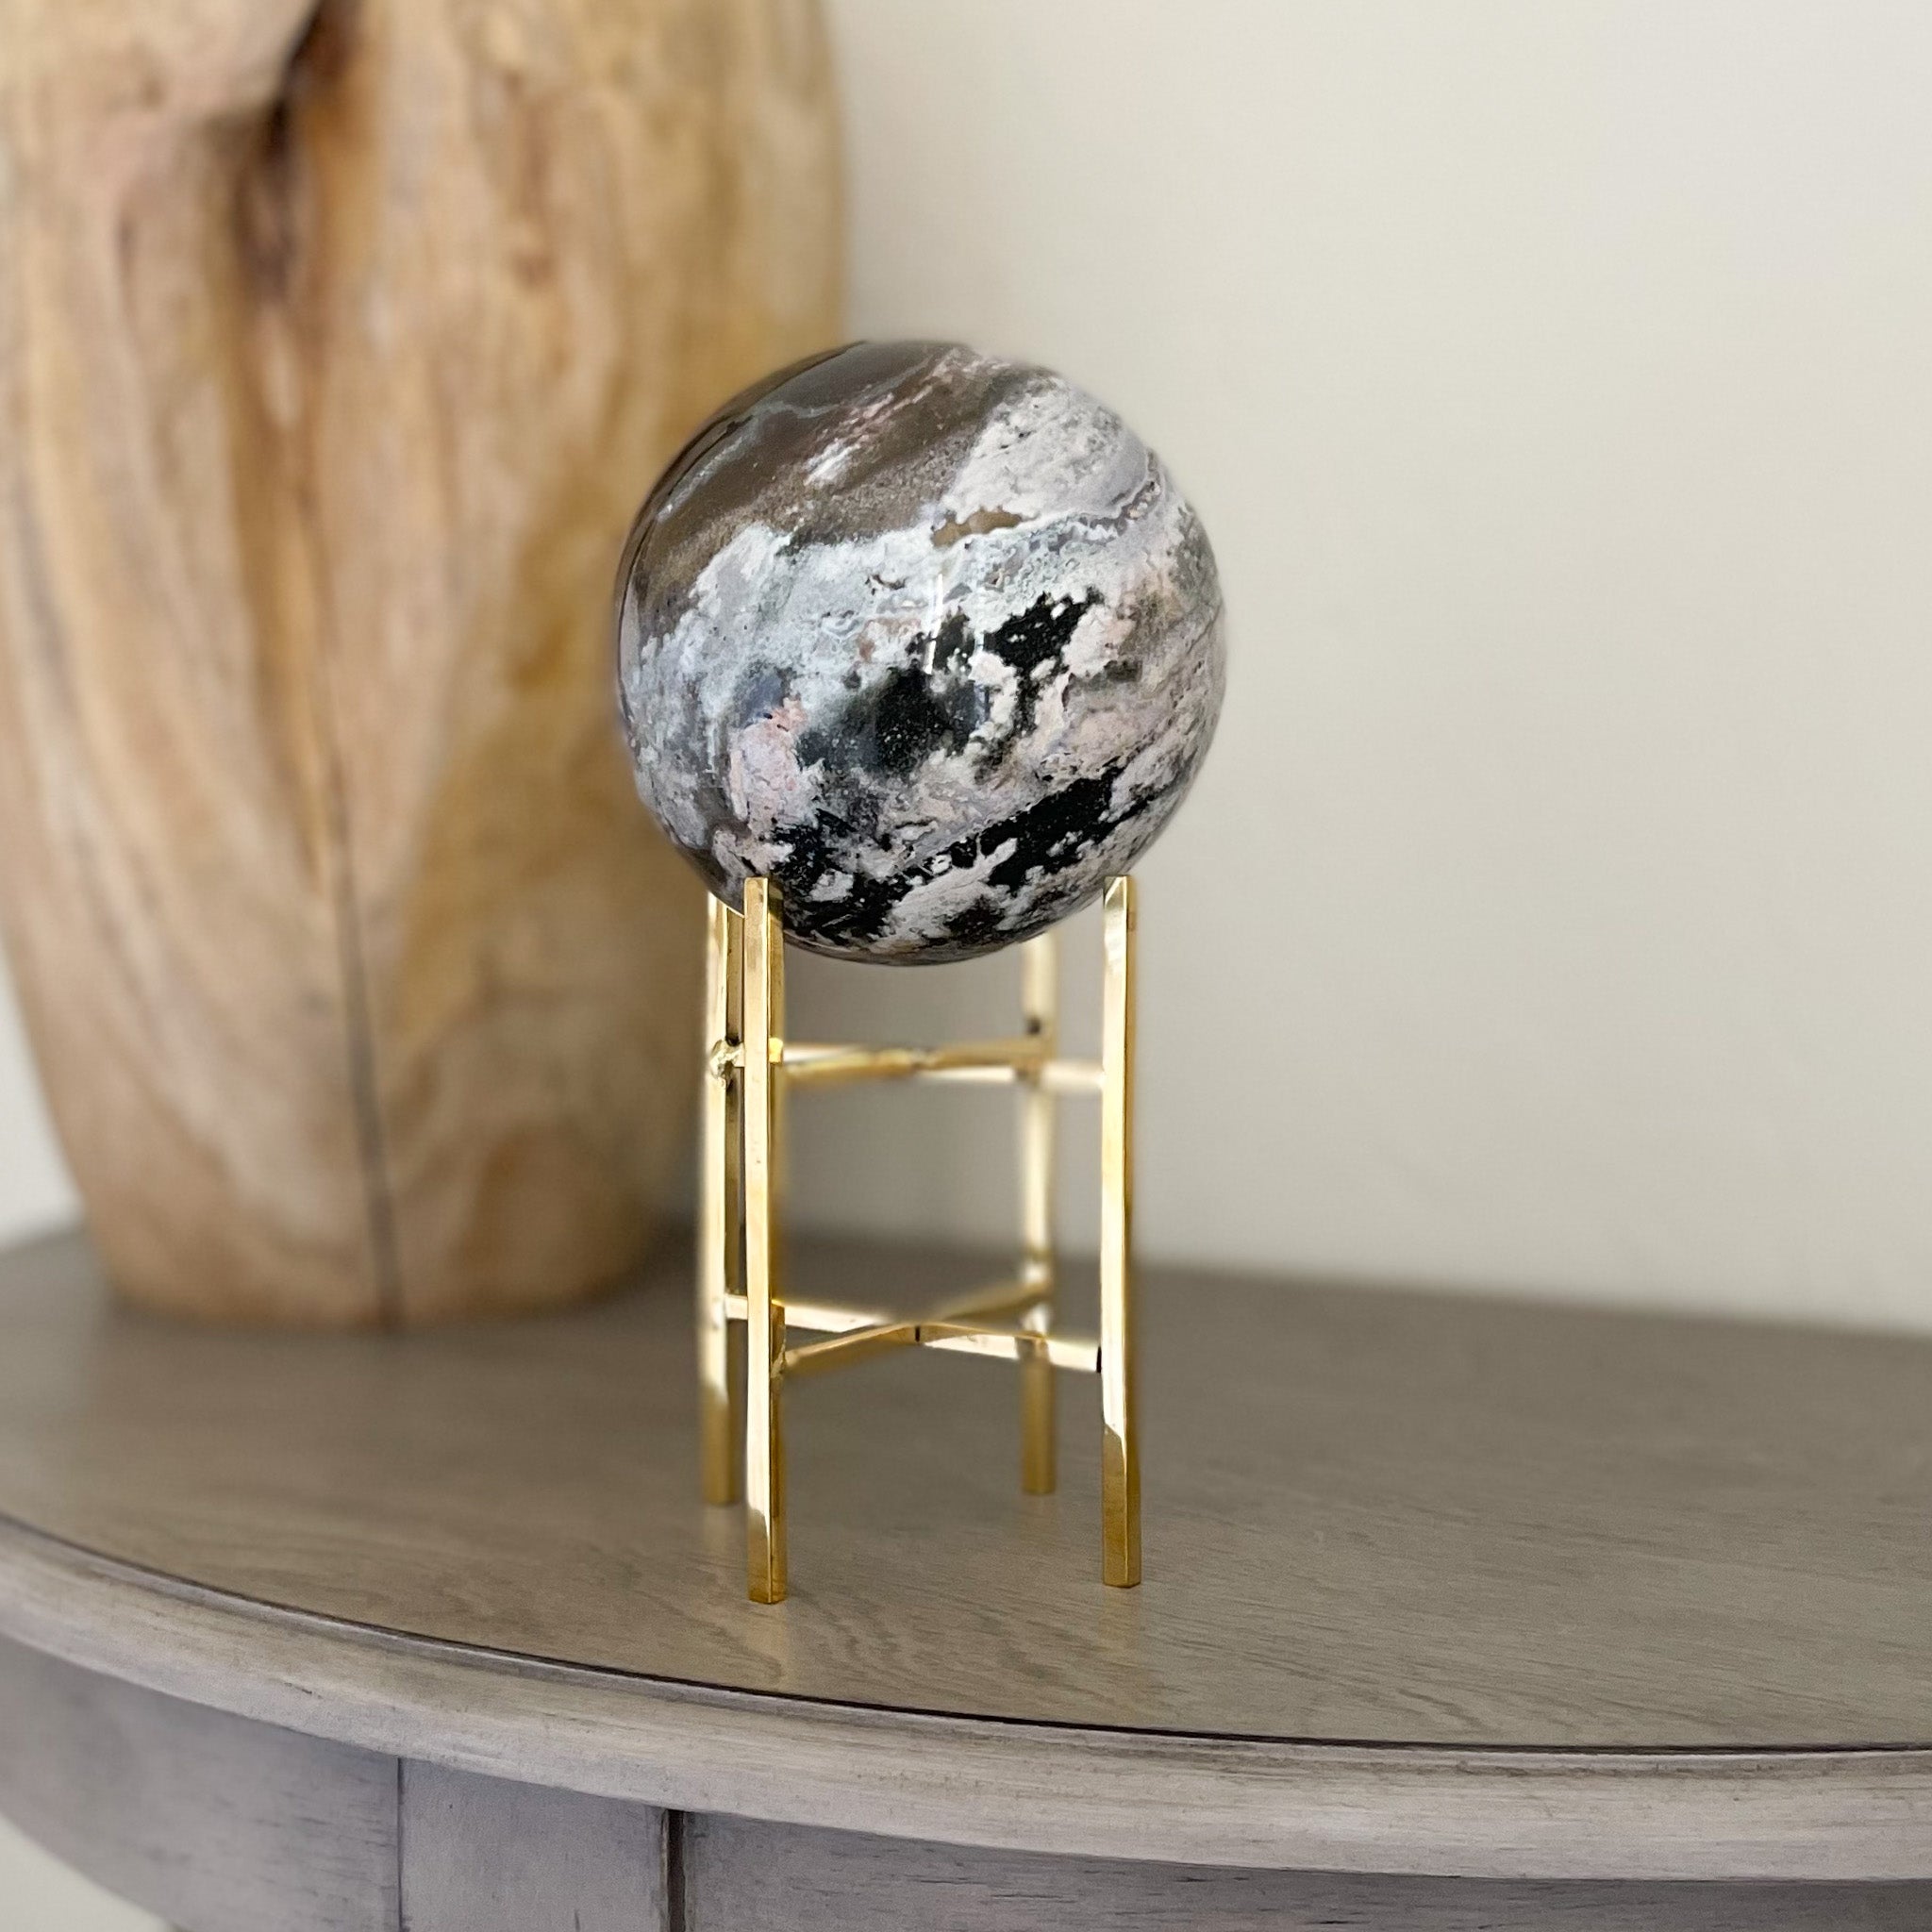 madagascar ocean jasper sphere on gold stand, natural home decor